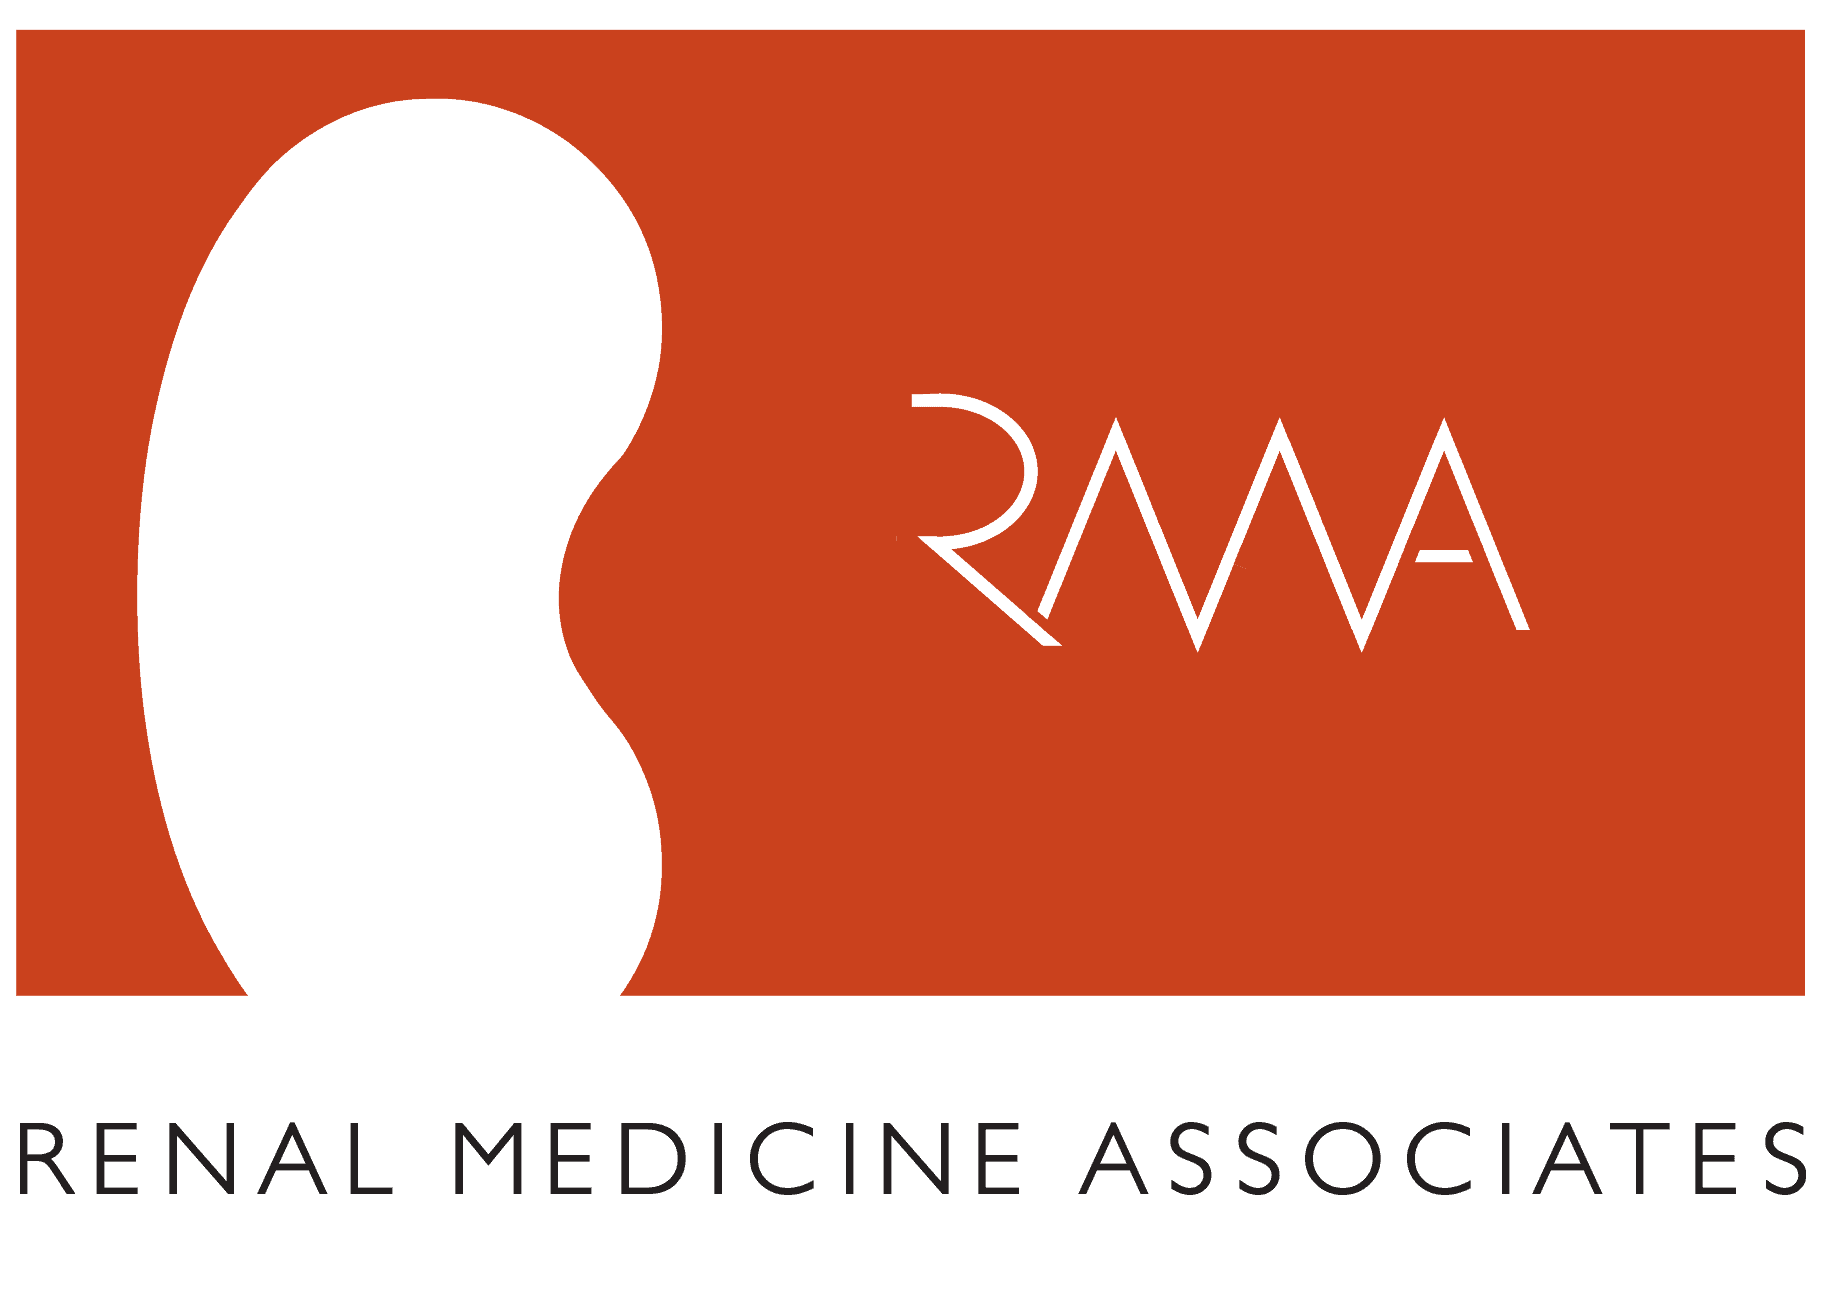 Renal Medicine Associates logo